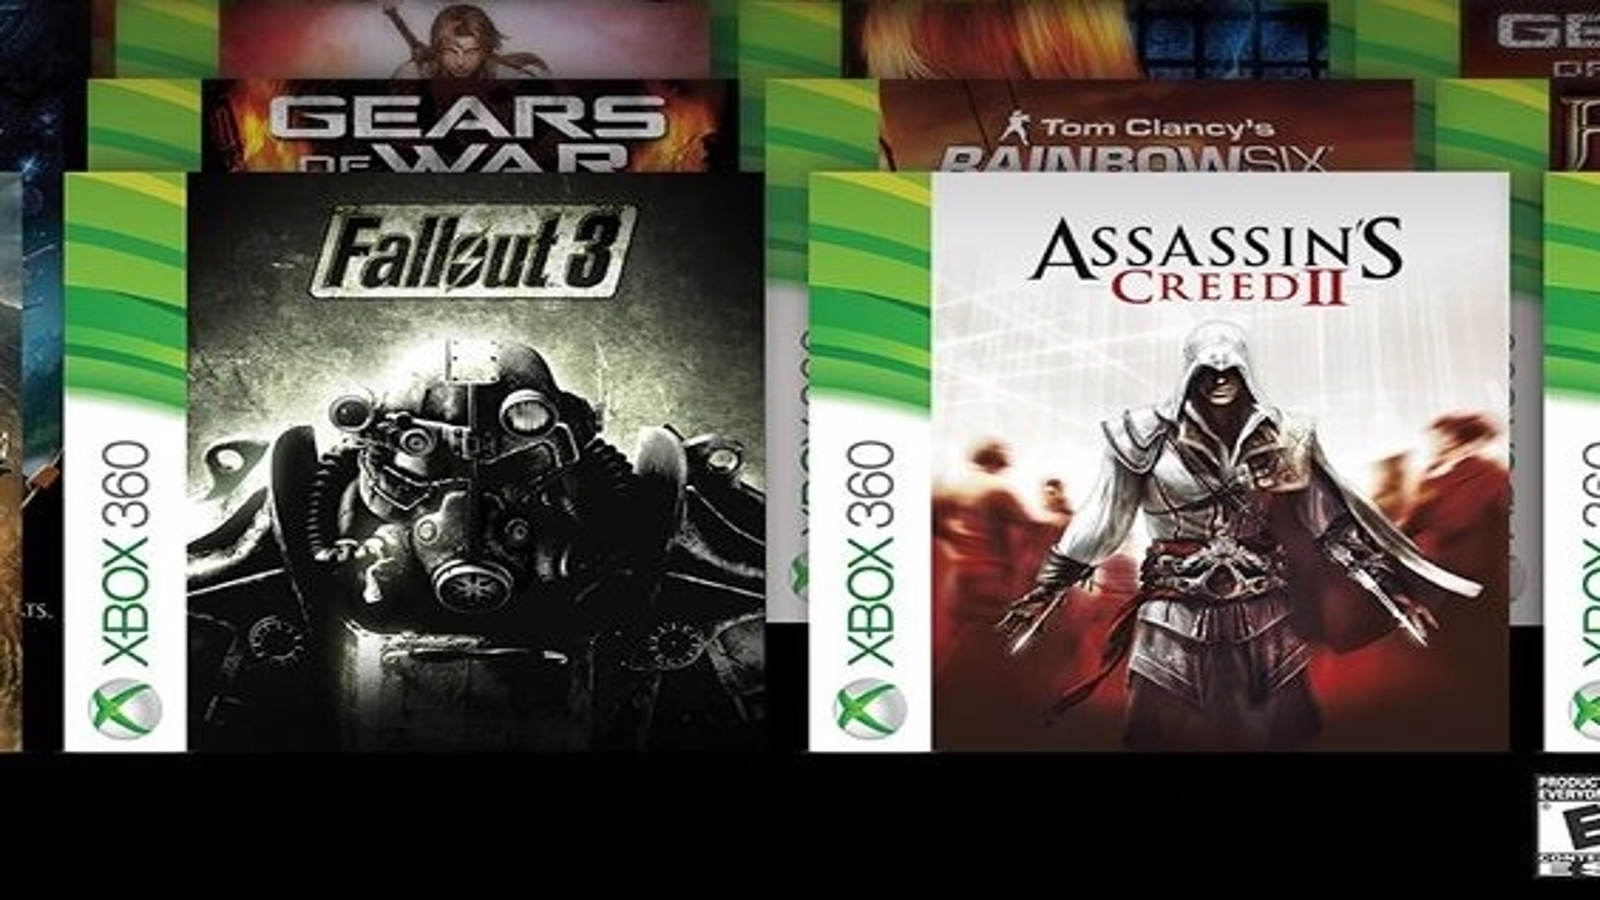 900 Jogos Digital Xbox 360 - DFG